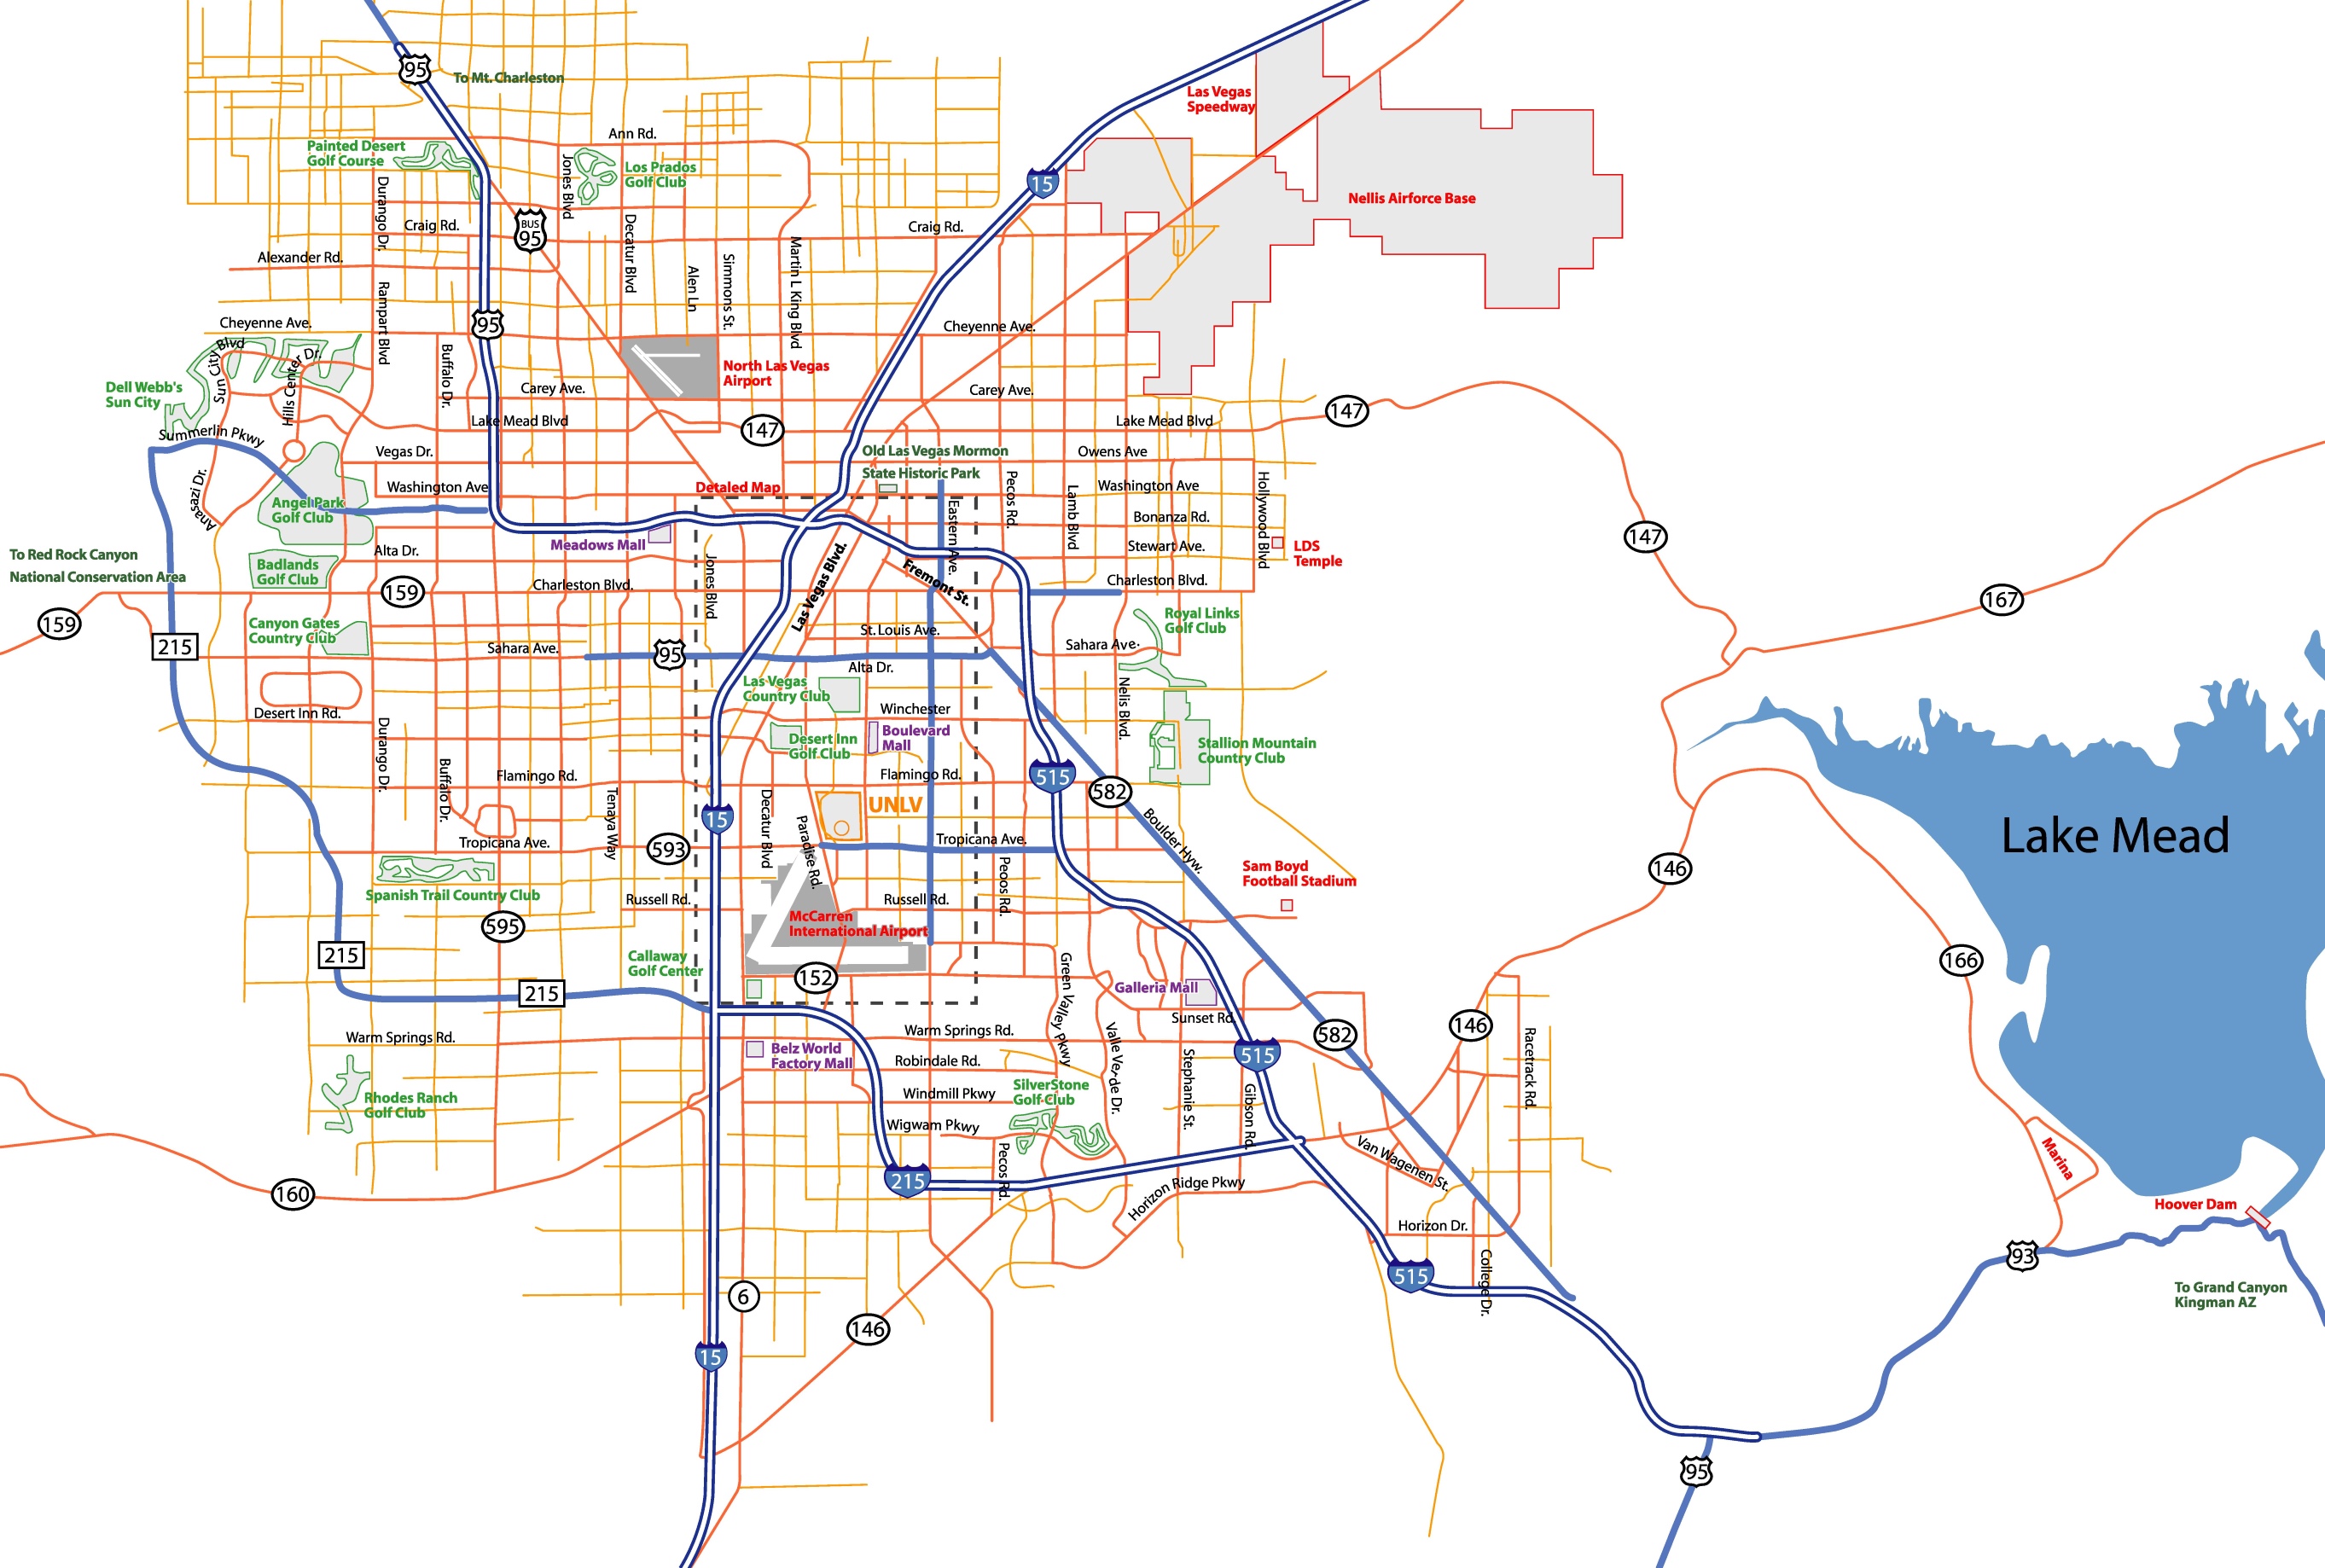 Las Vegas Street Map